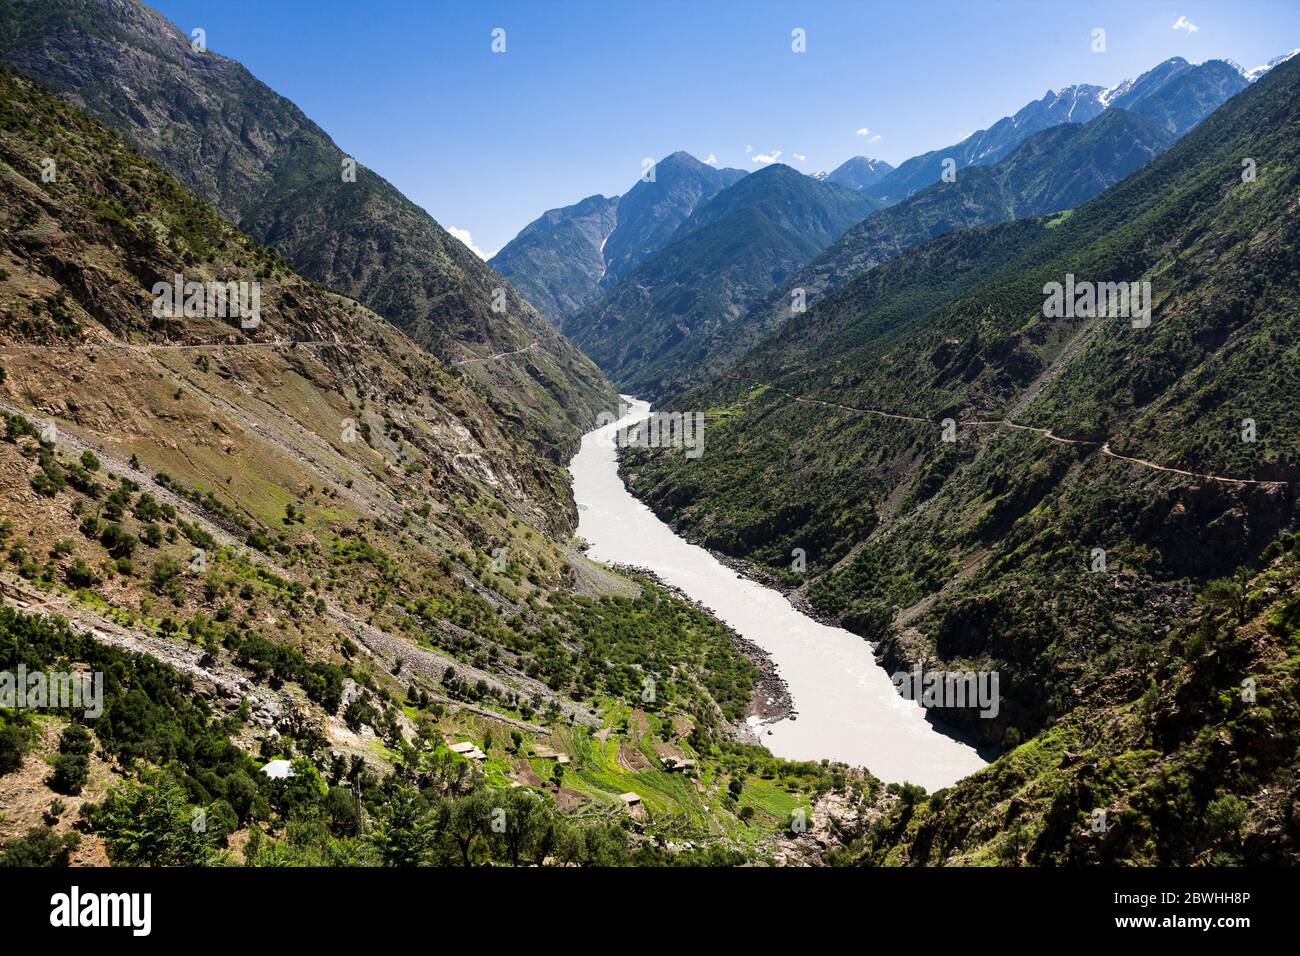 The upper steam of Indus river, near Besham City, Indus valley, Hindu kush mountain, Shangla, Khyber Pakhtunkhwa Province, Pakistan, South Asia, Asia Stock Photo